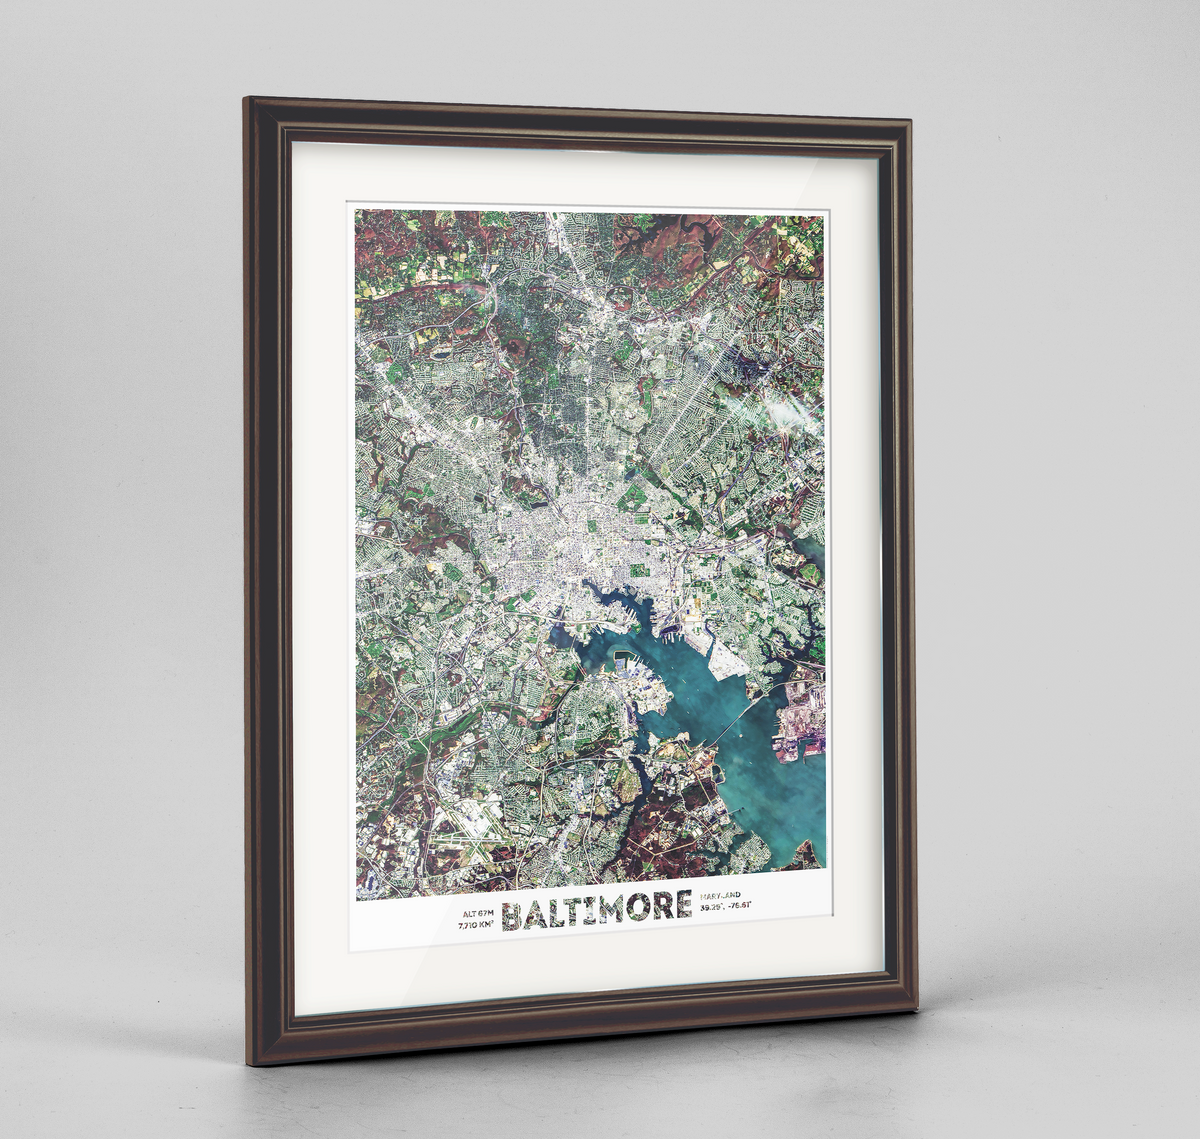 Baltimore Earth Photography Art Print - Framed